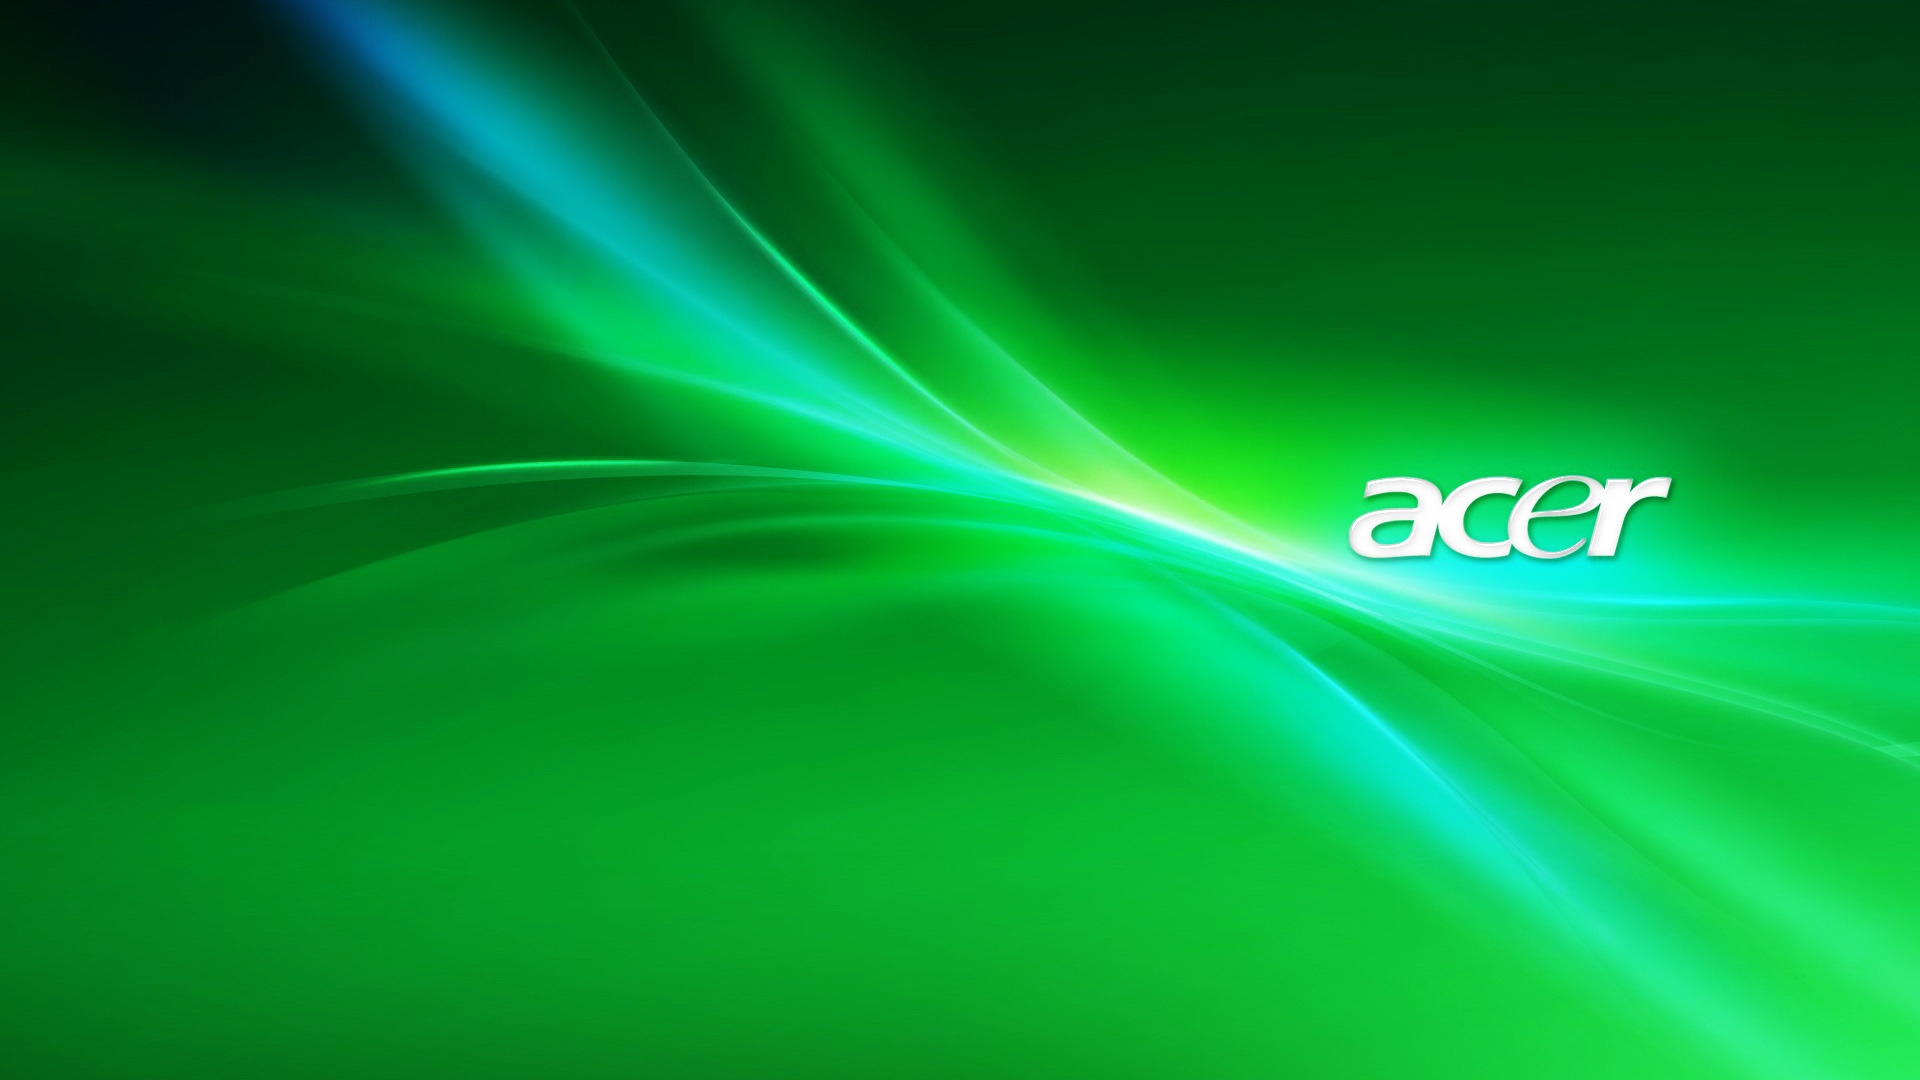 Acer Green for 1920 x 1080 HDTV 1080p resolution